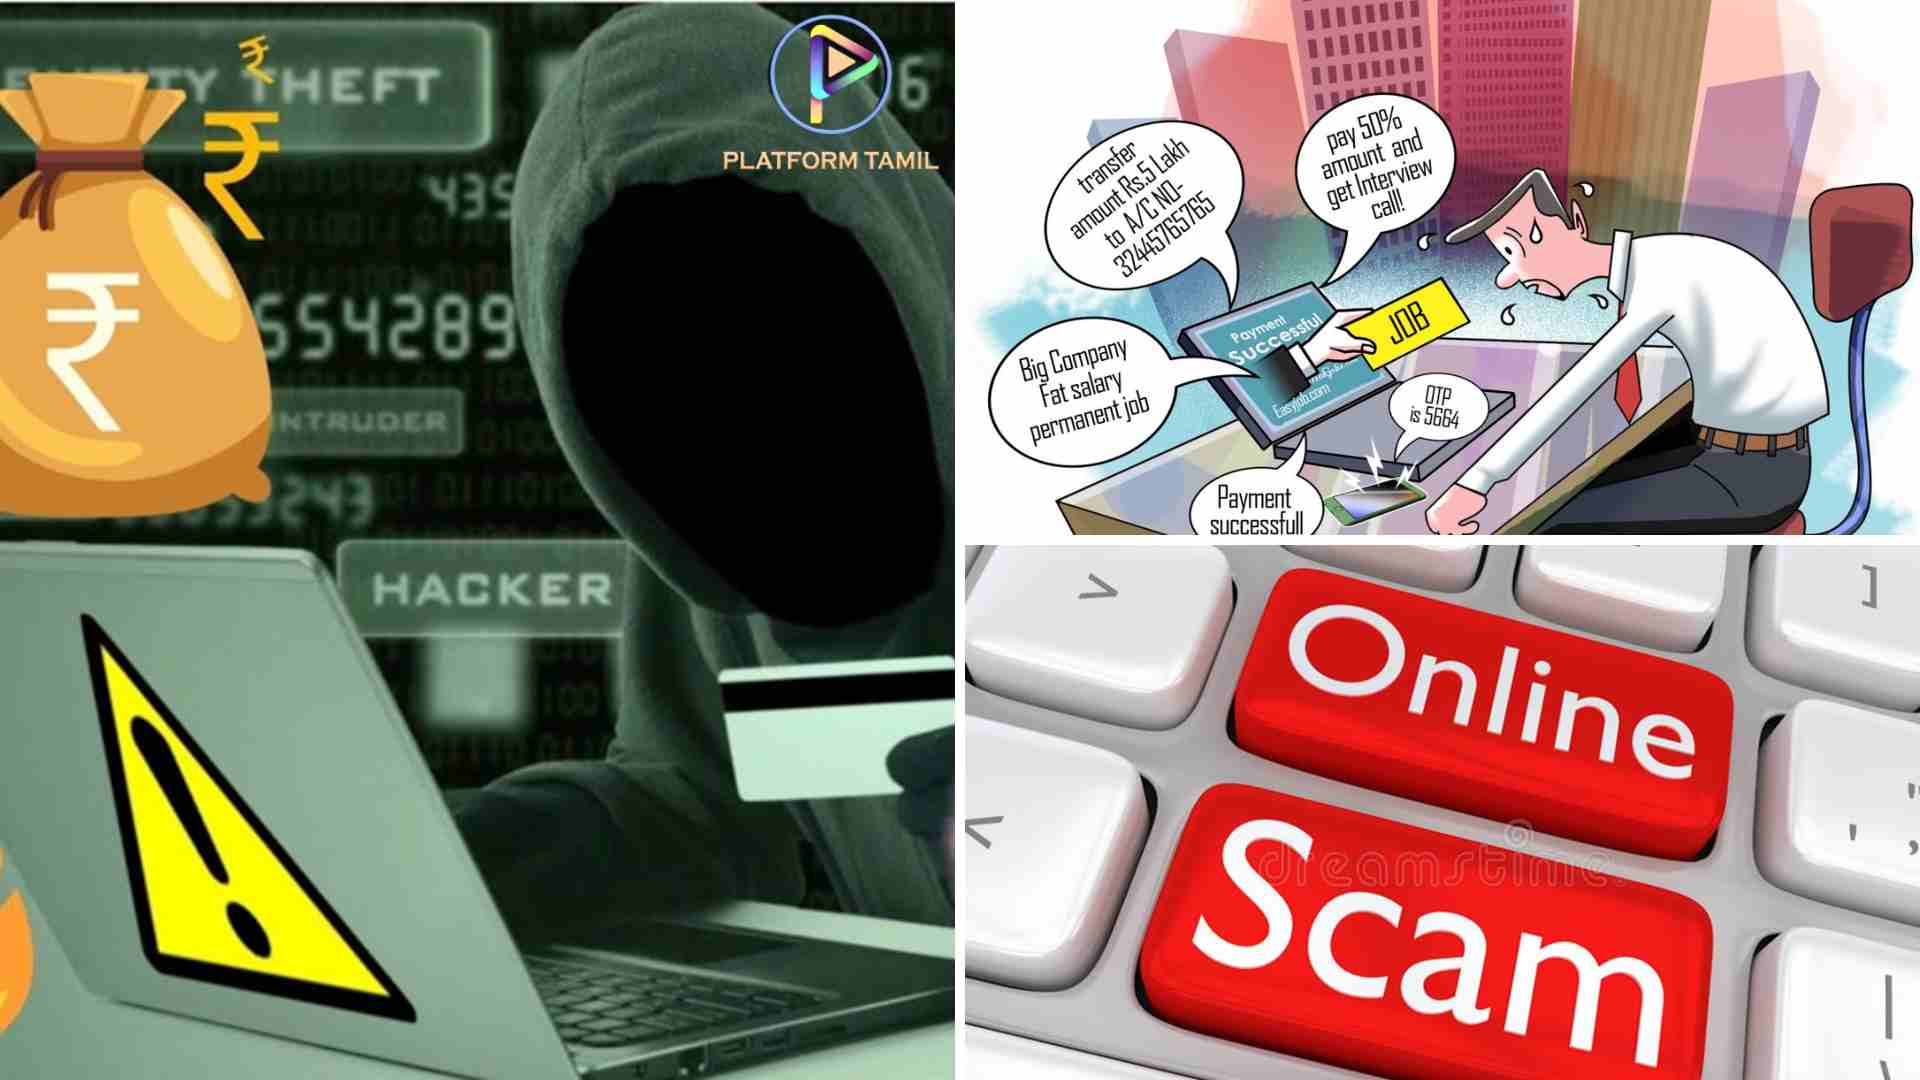 online scam - Platformtamil